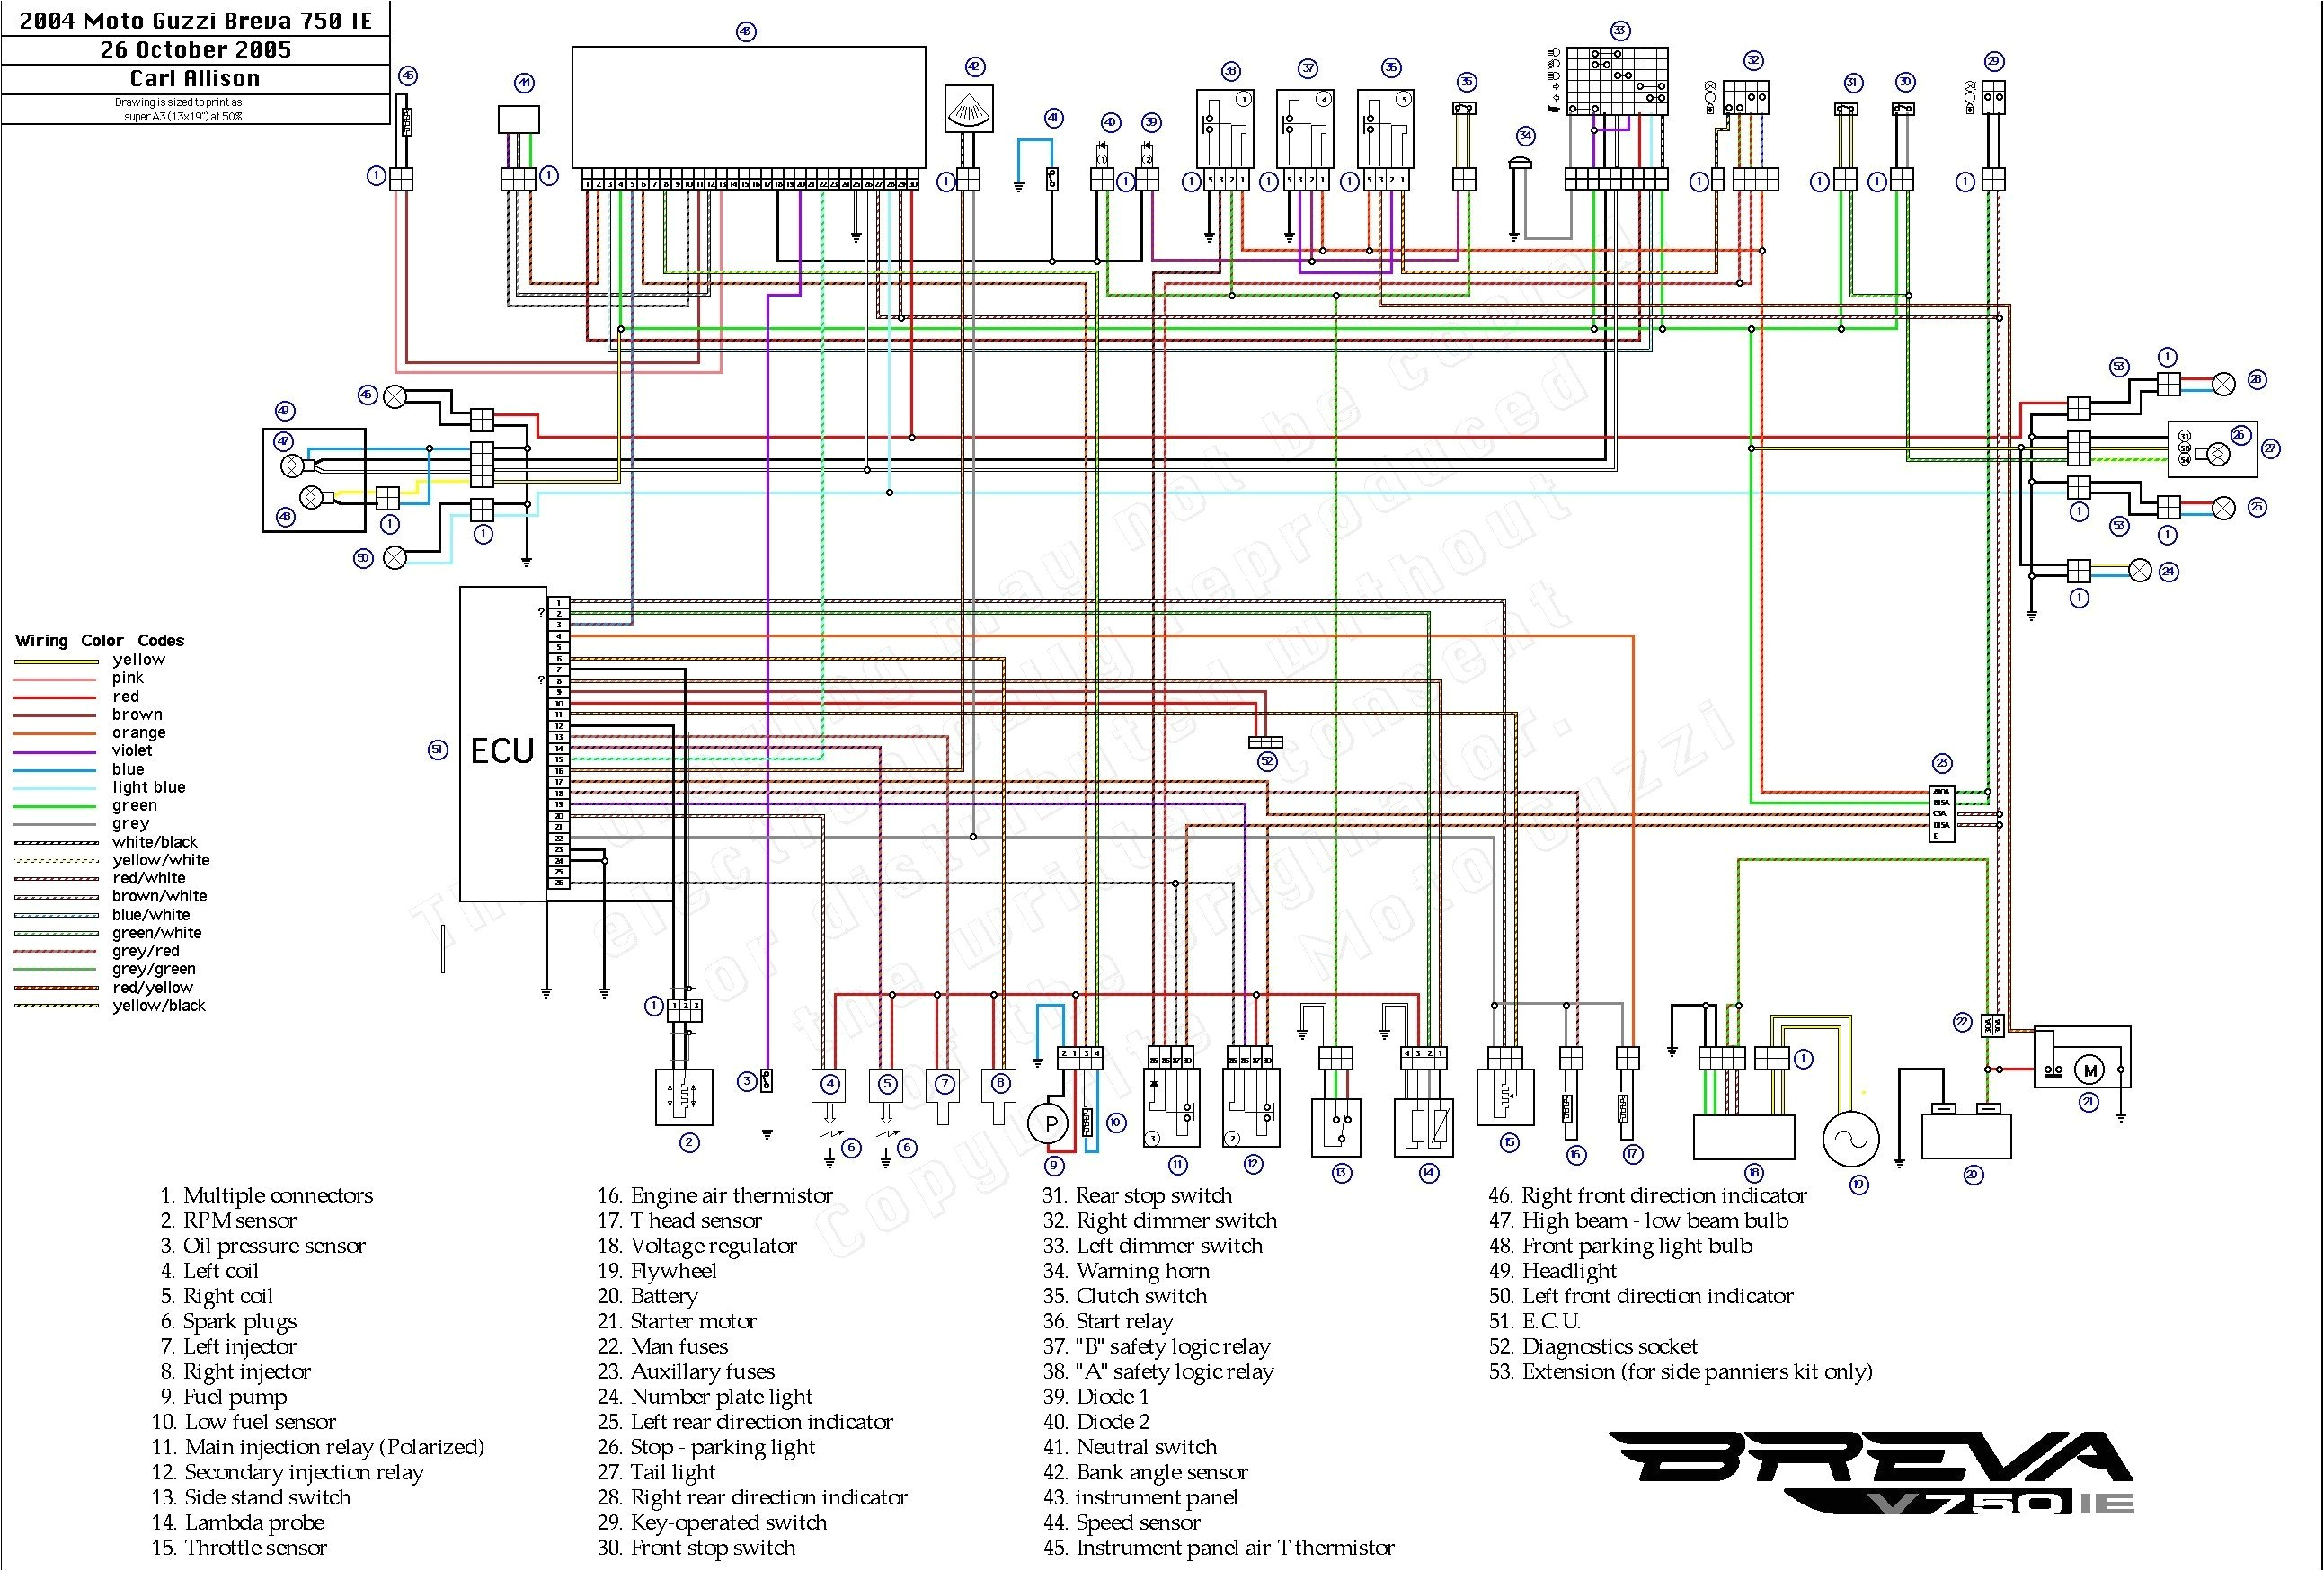 mahindra wiring diagram wiring diagram megamahindra engine diagram wiring diagram expert mahindra wiring diagram mahindra engine